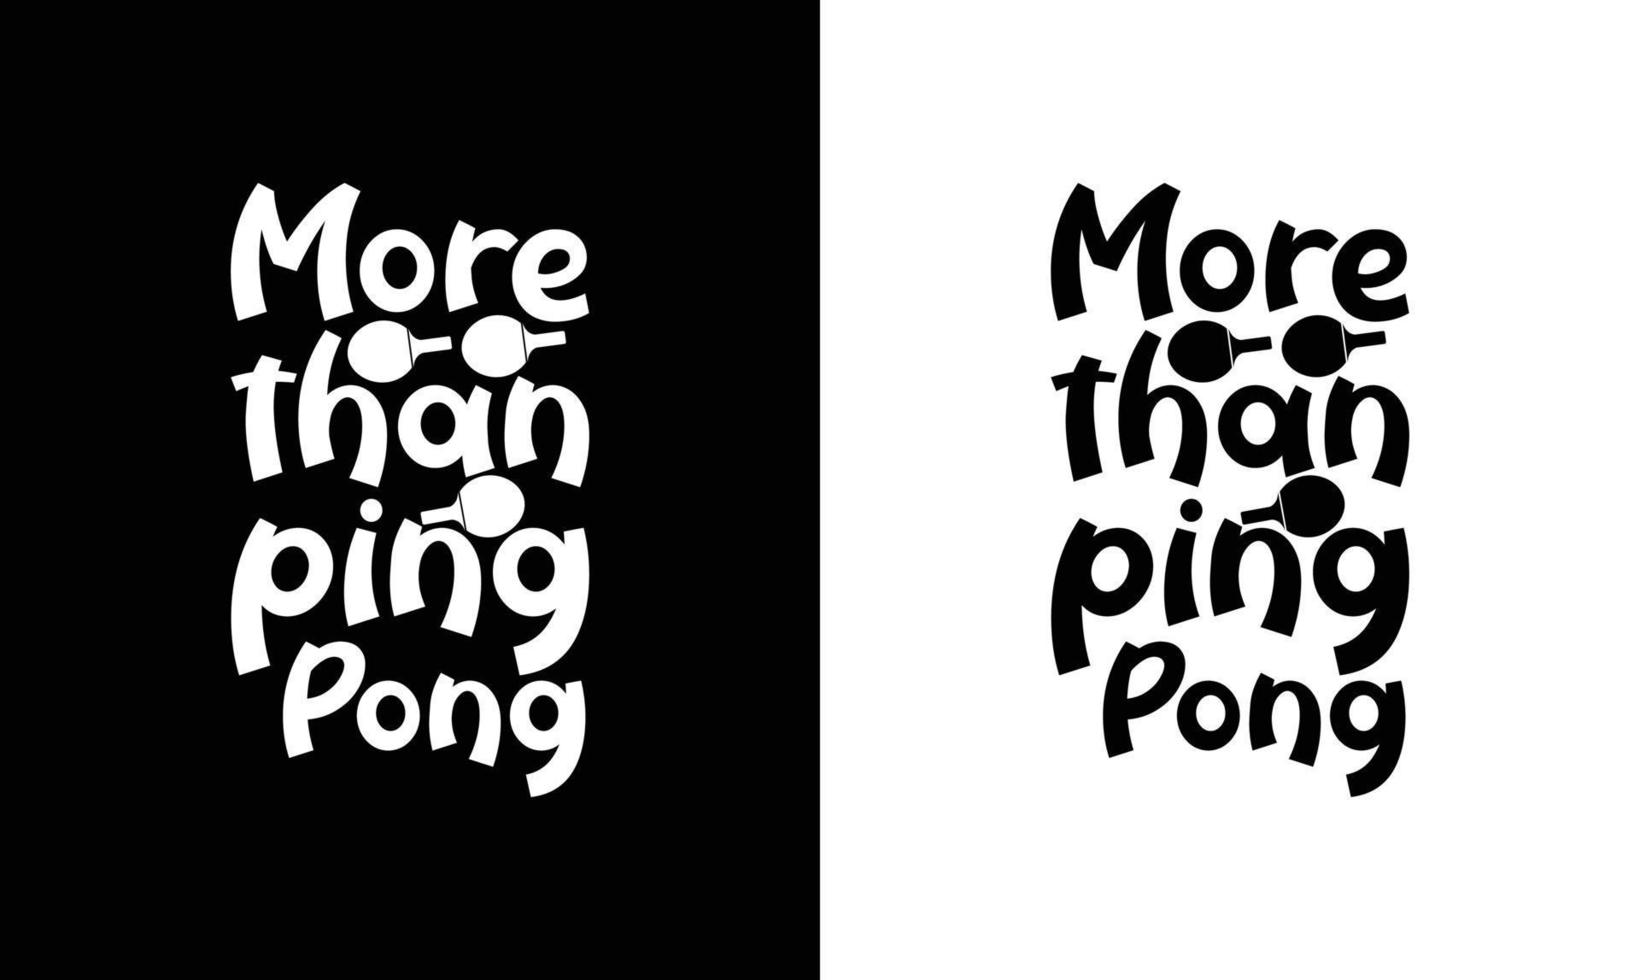 ping pong tabell tennis Citat t skjorta design, typografi vektor